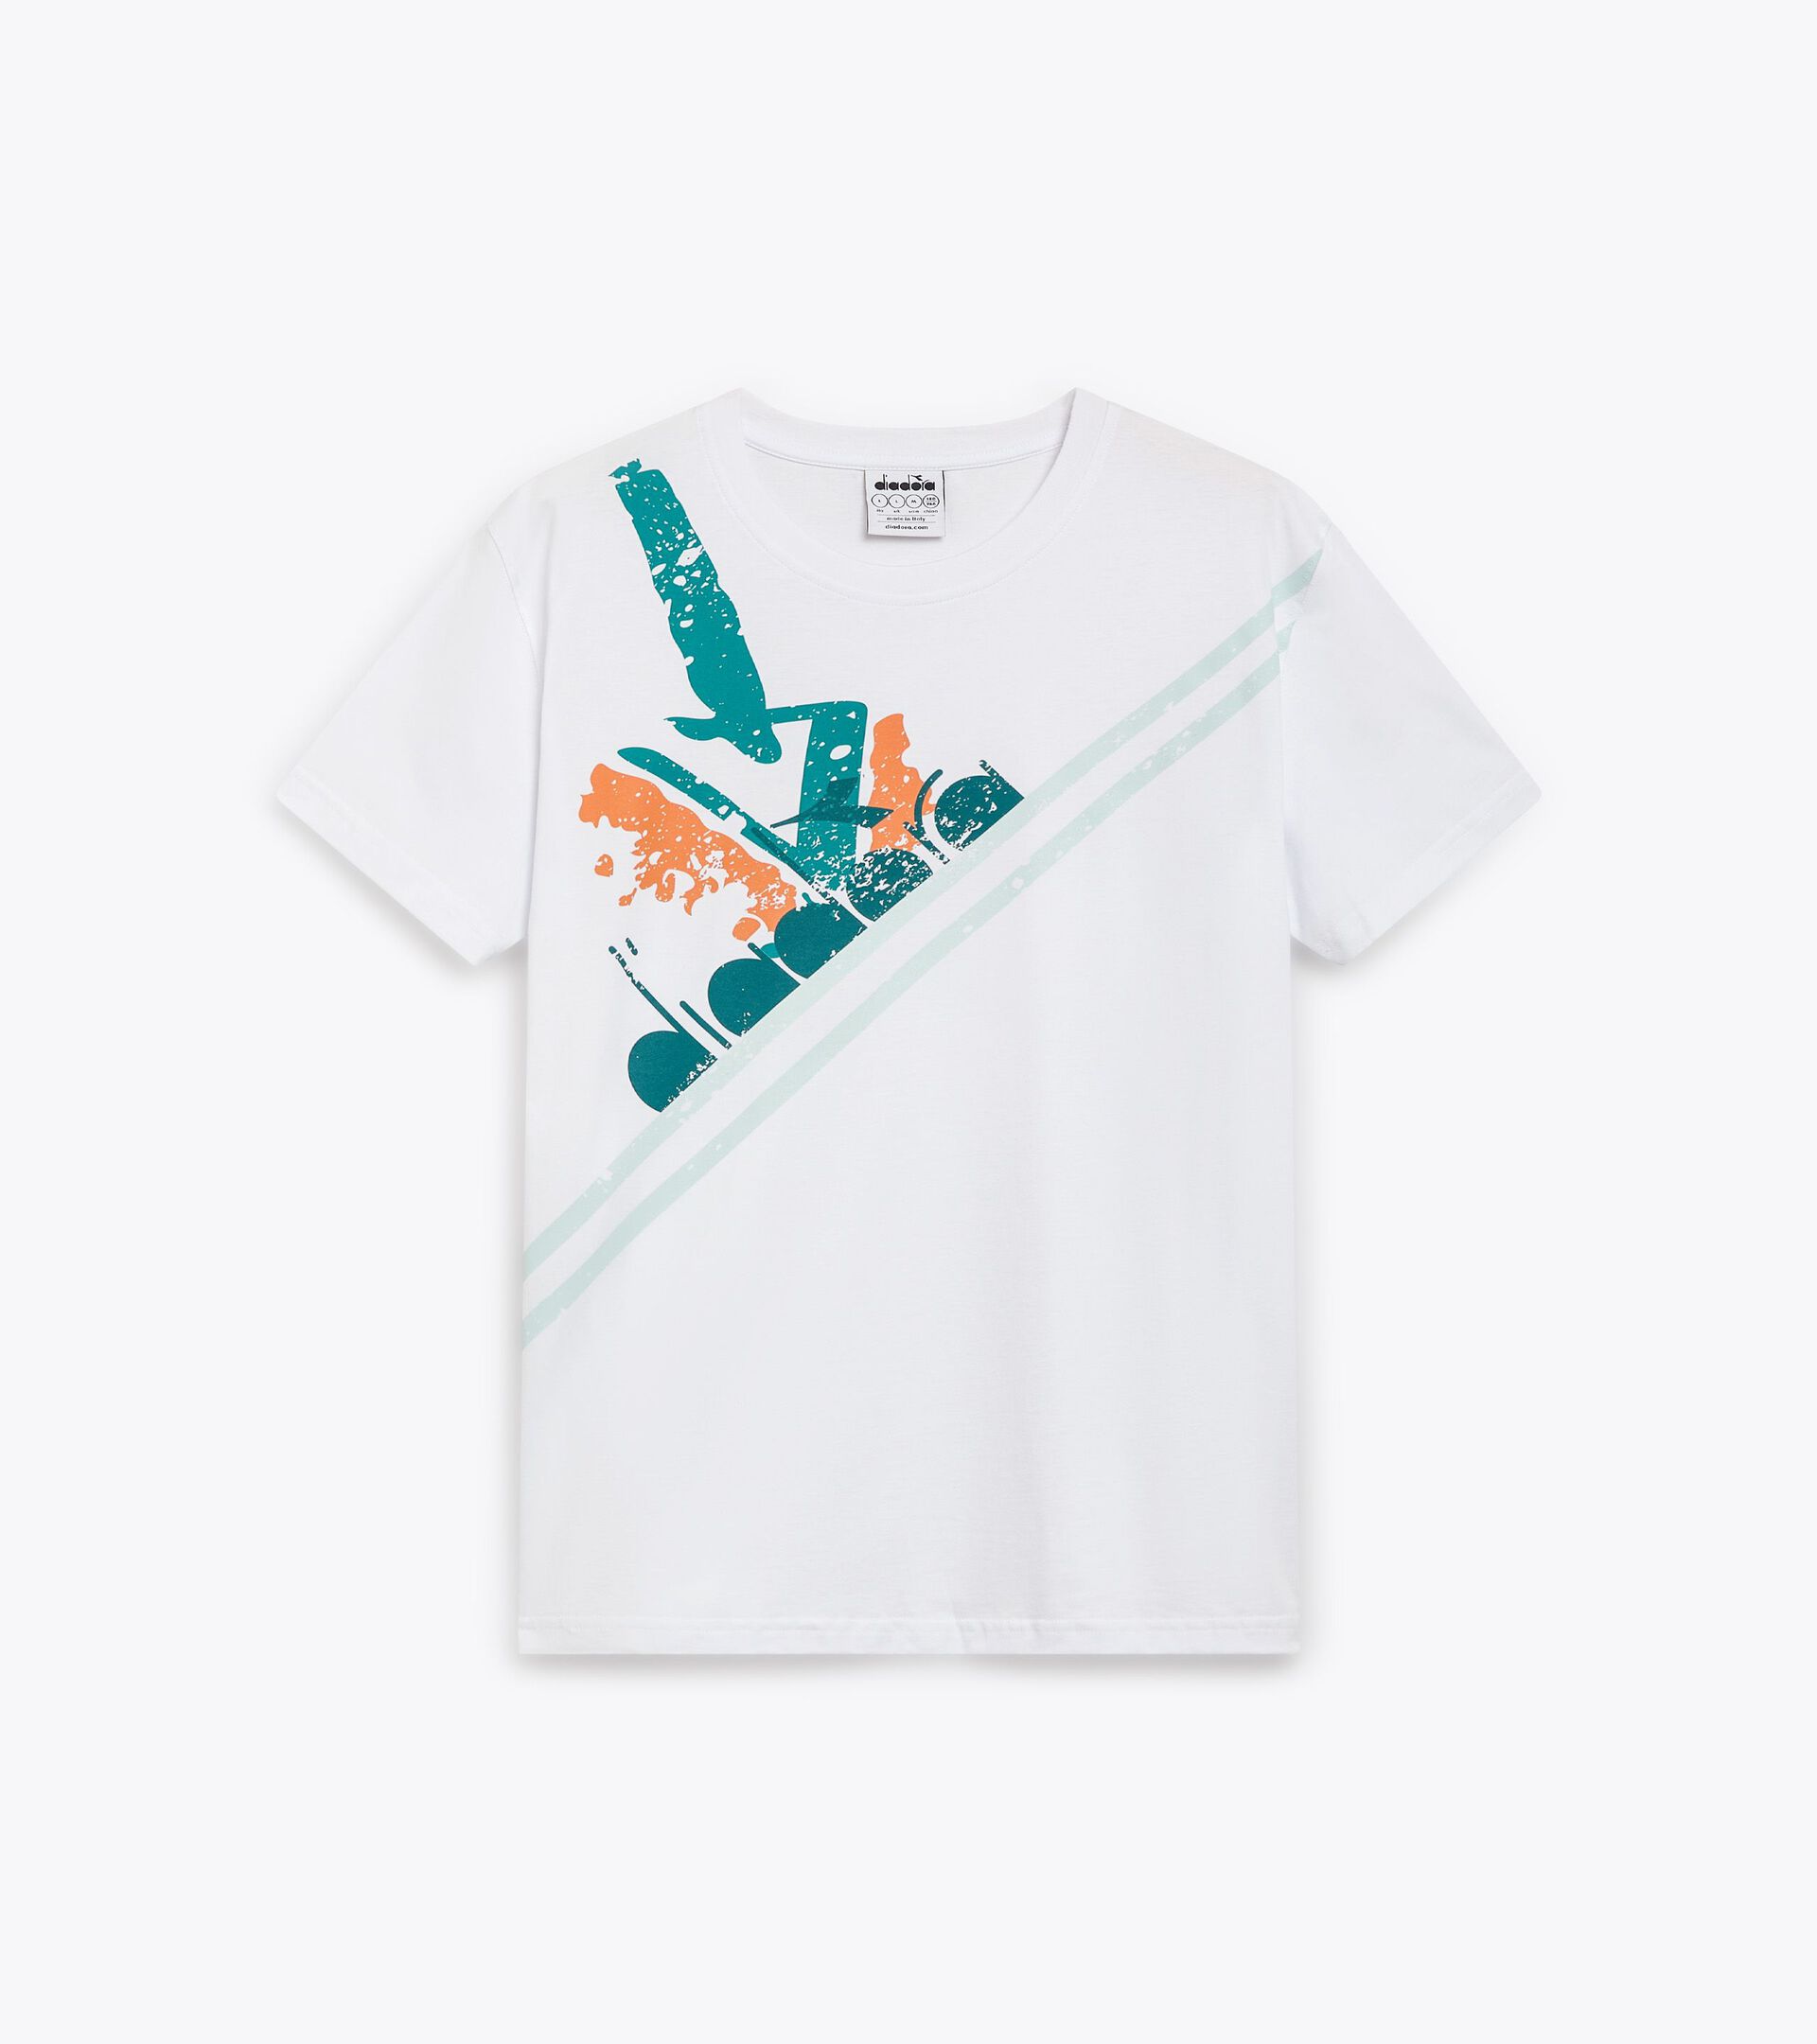 Camiseta deportiva estilo años 90 - Made in Italy - Hombre T-SHIRT SS TENNIS 90 PUERTO AZUL - Diadora